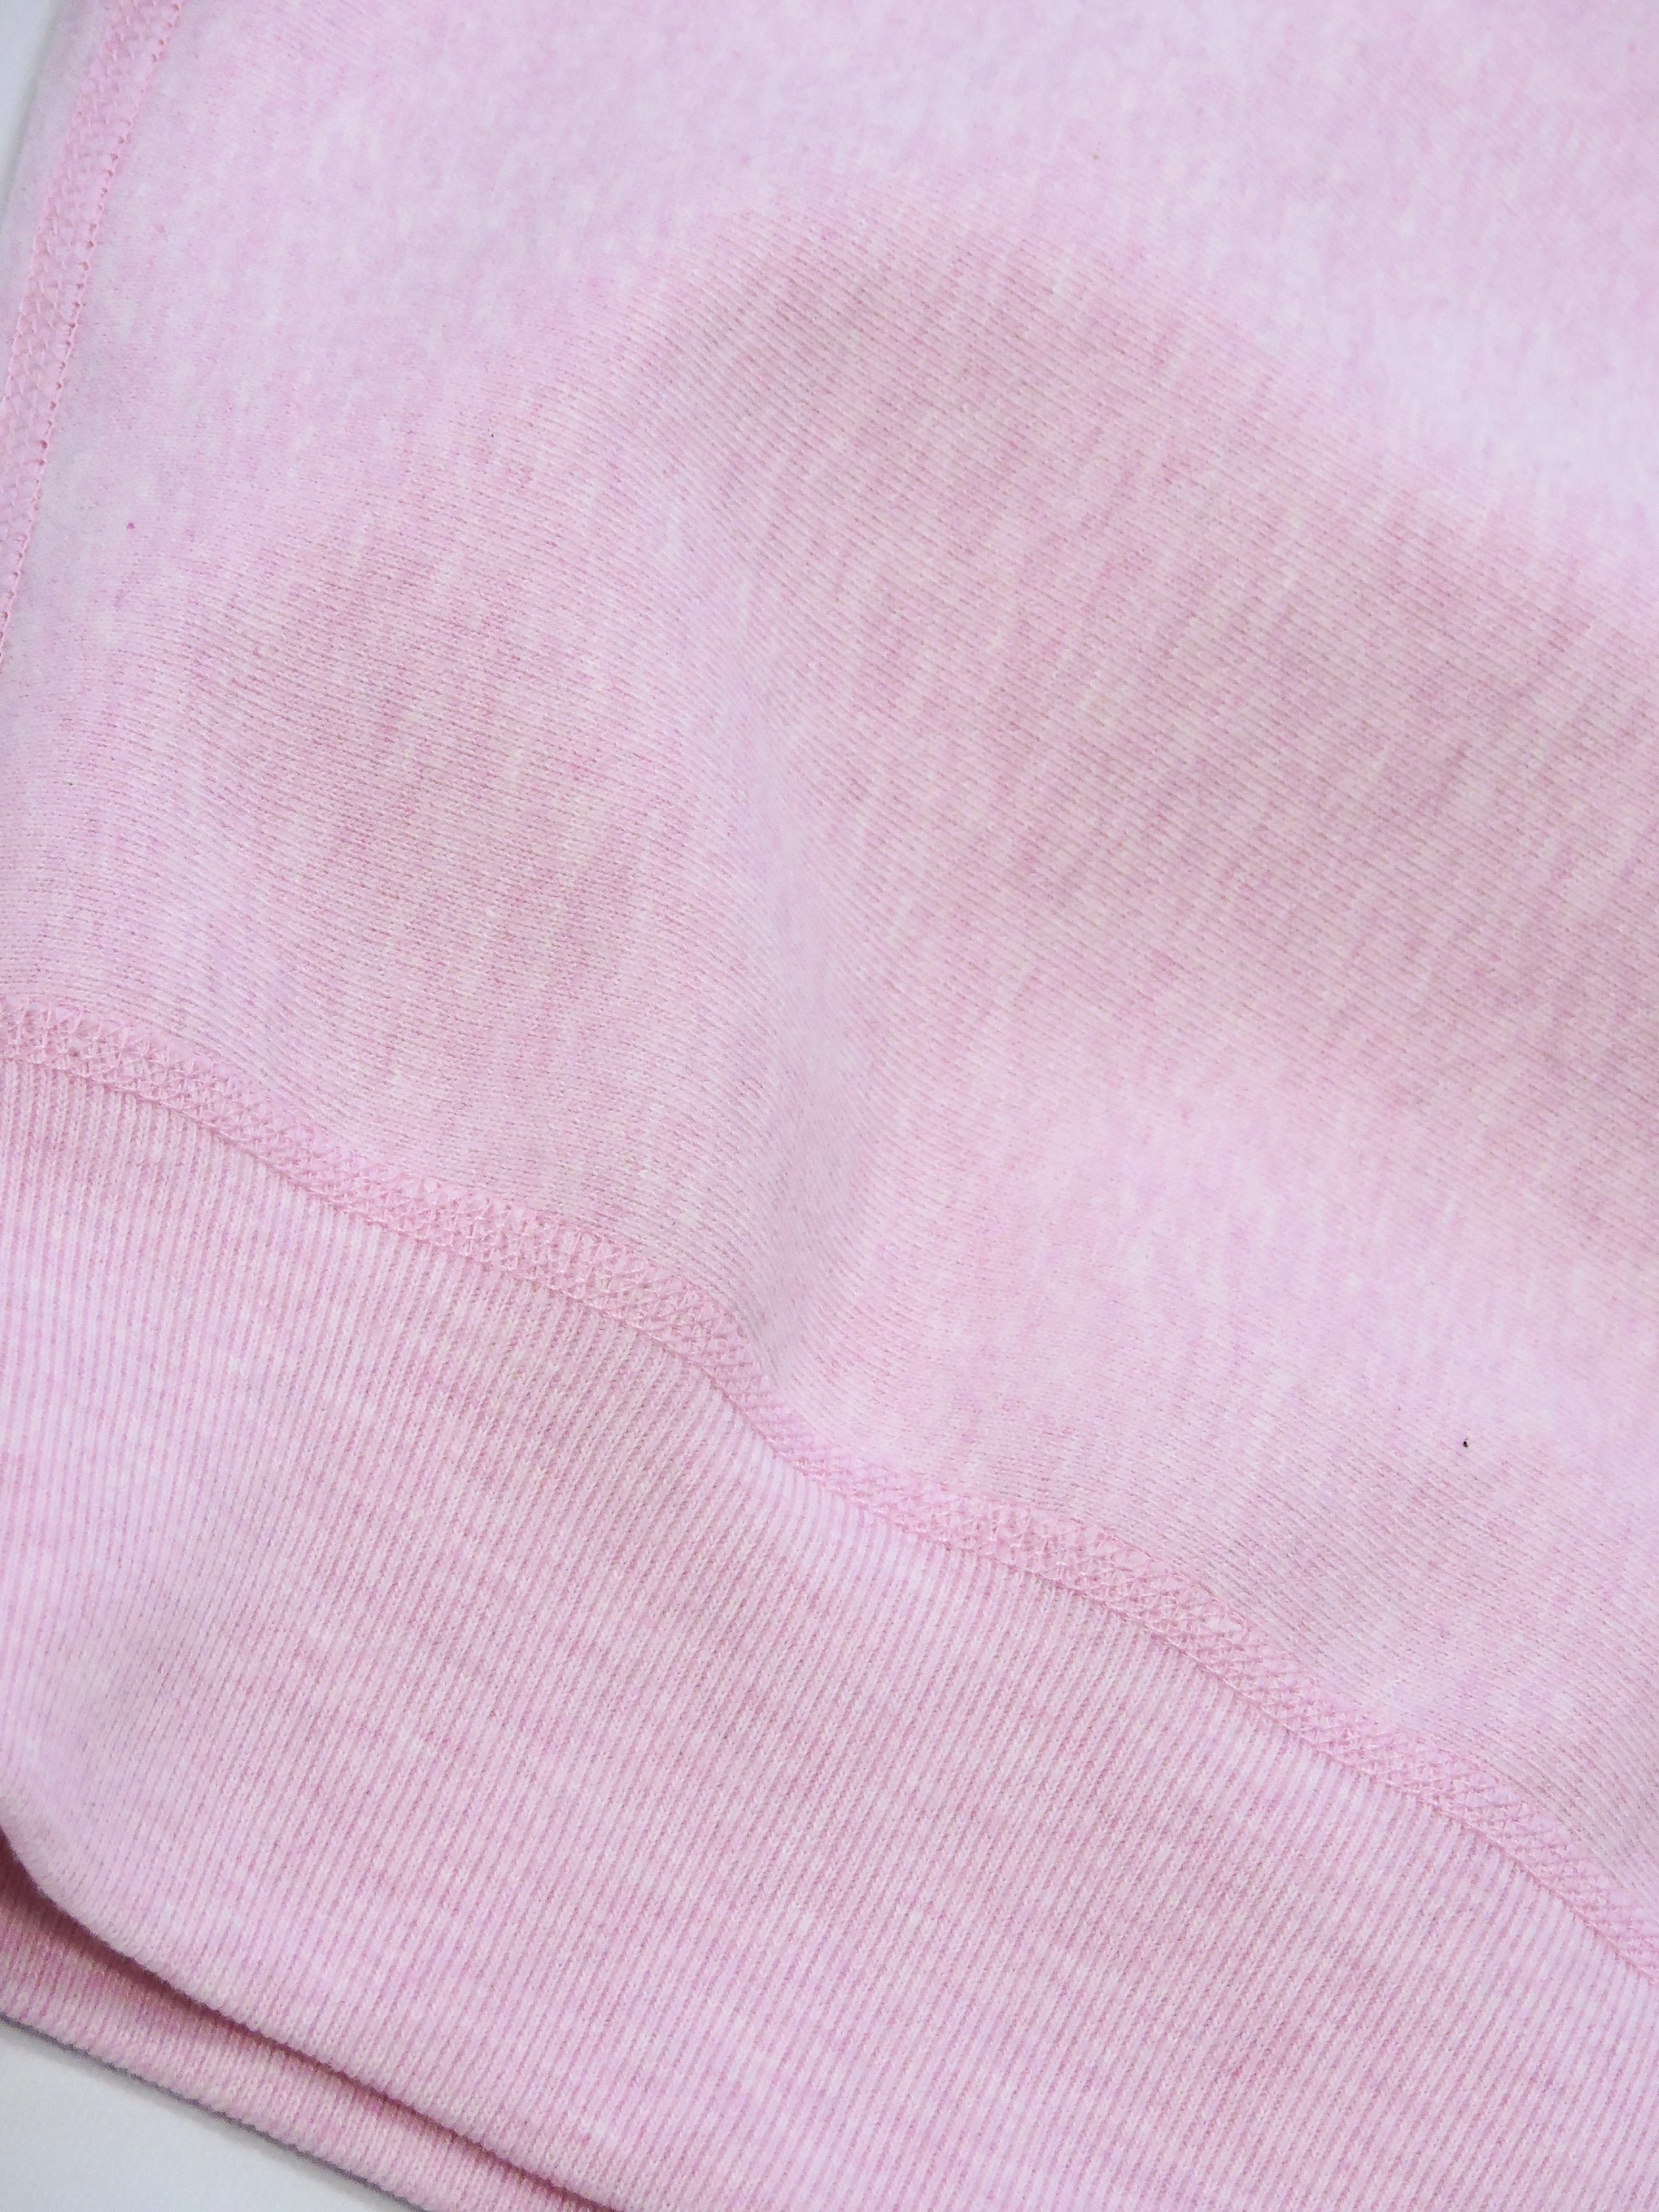 Close up of the waist ribbing and knitted seams